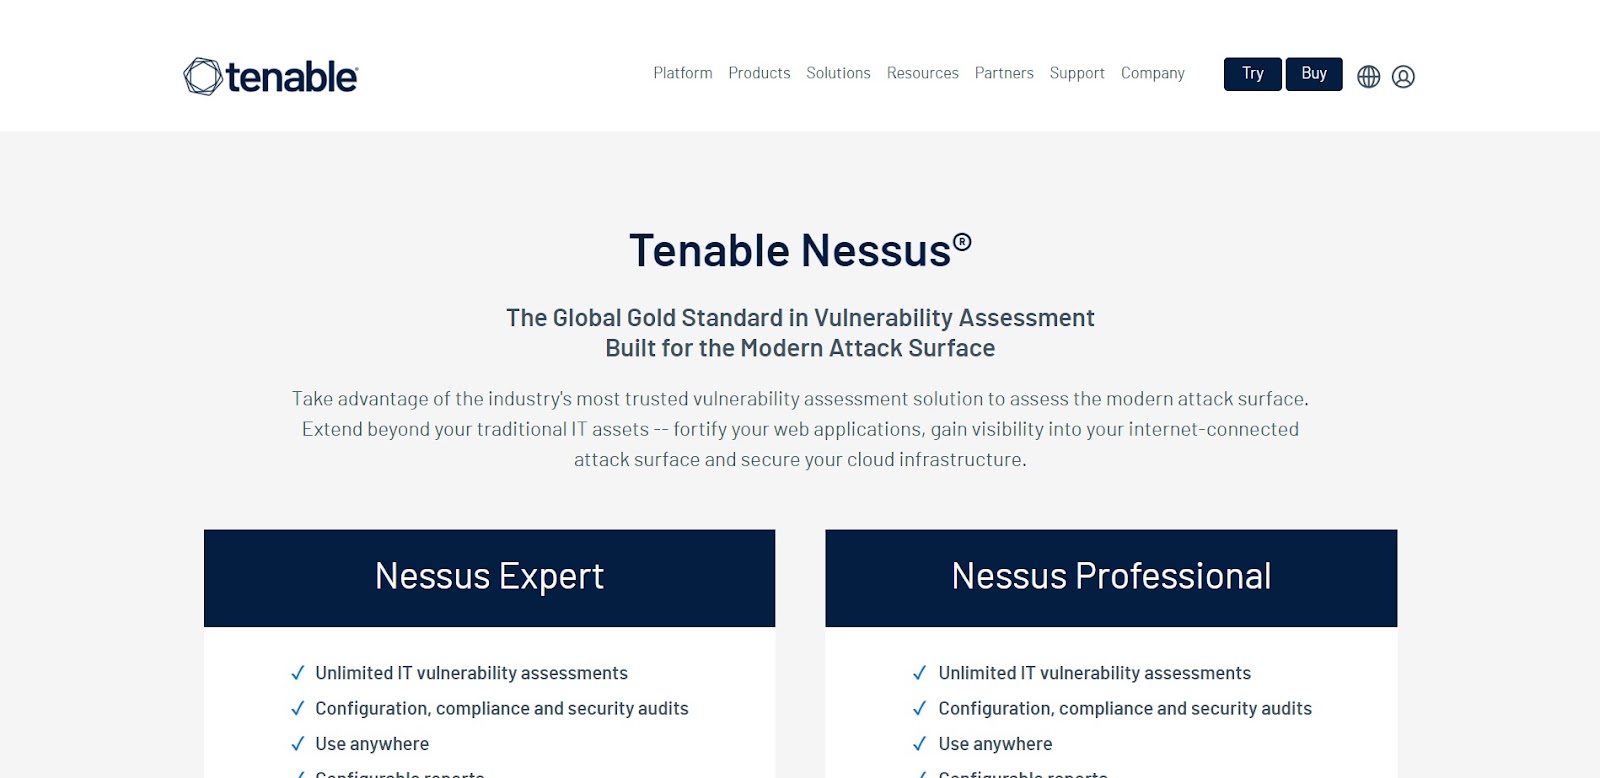 A screenshot of Tenable Nessus' website